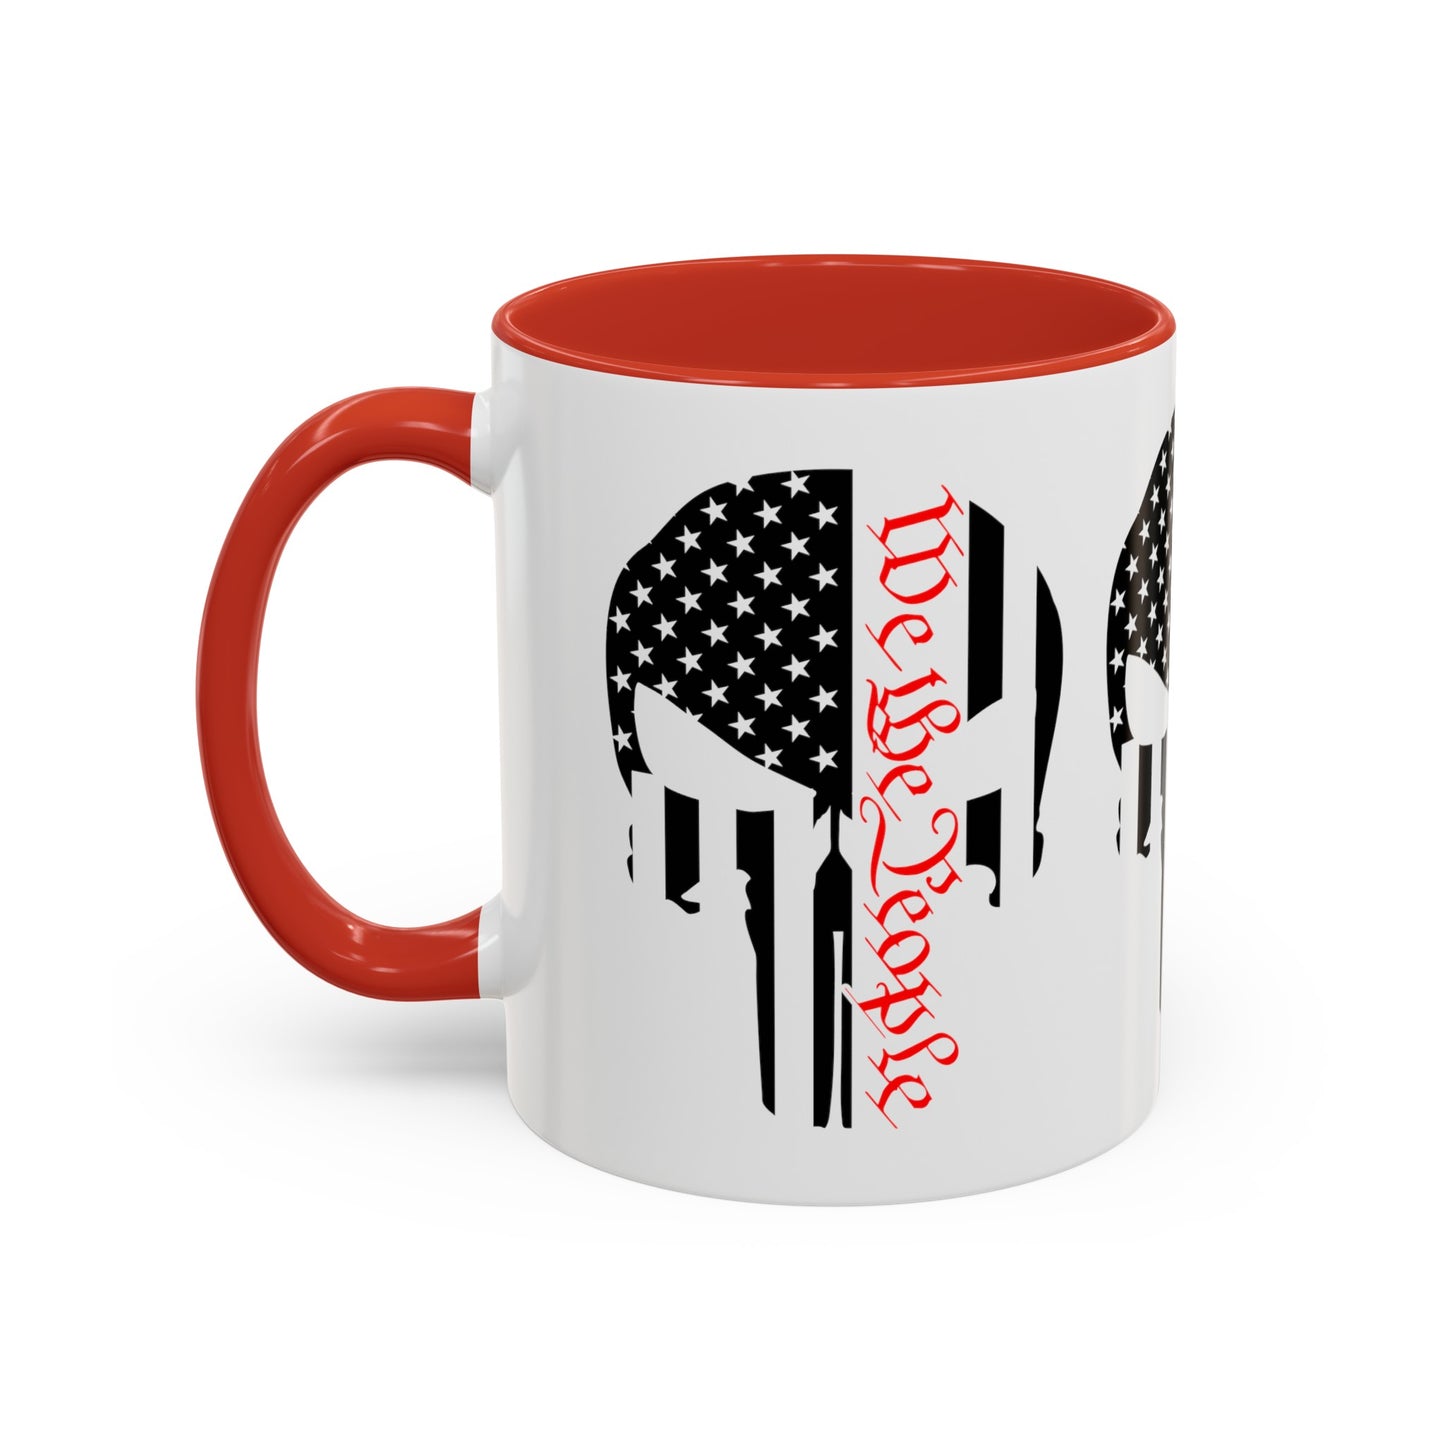 Enjoy sipping your favorite beverage from this iconic We The People Punisher Skull Logo mug. Shop SmithRidge.farm for #SpiritOfAmerica merchandise.